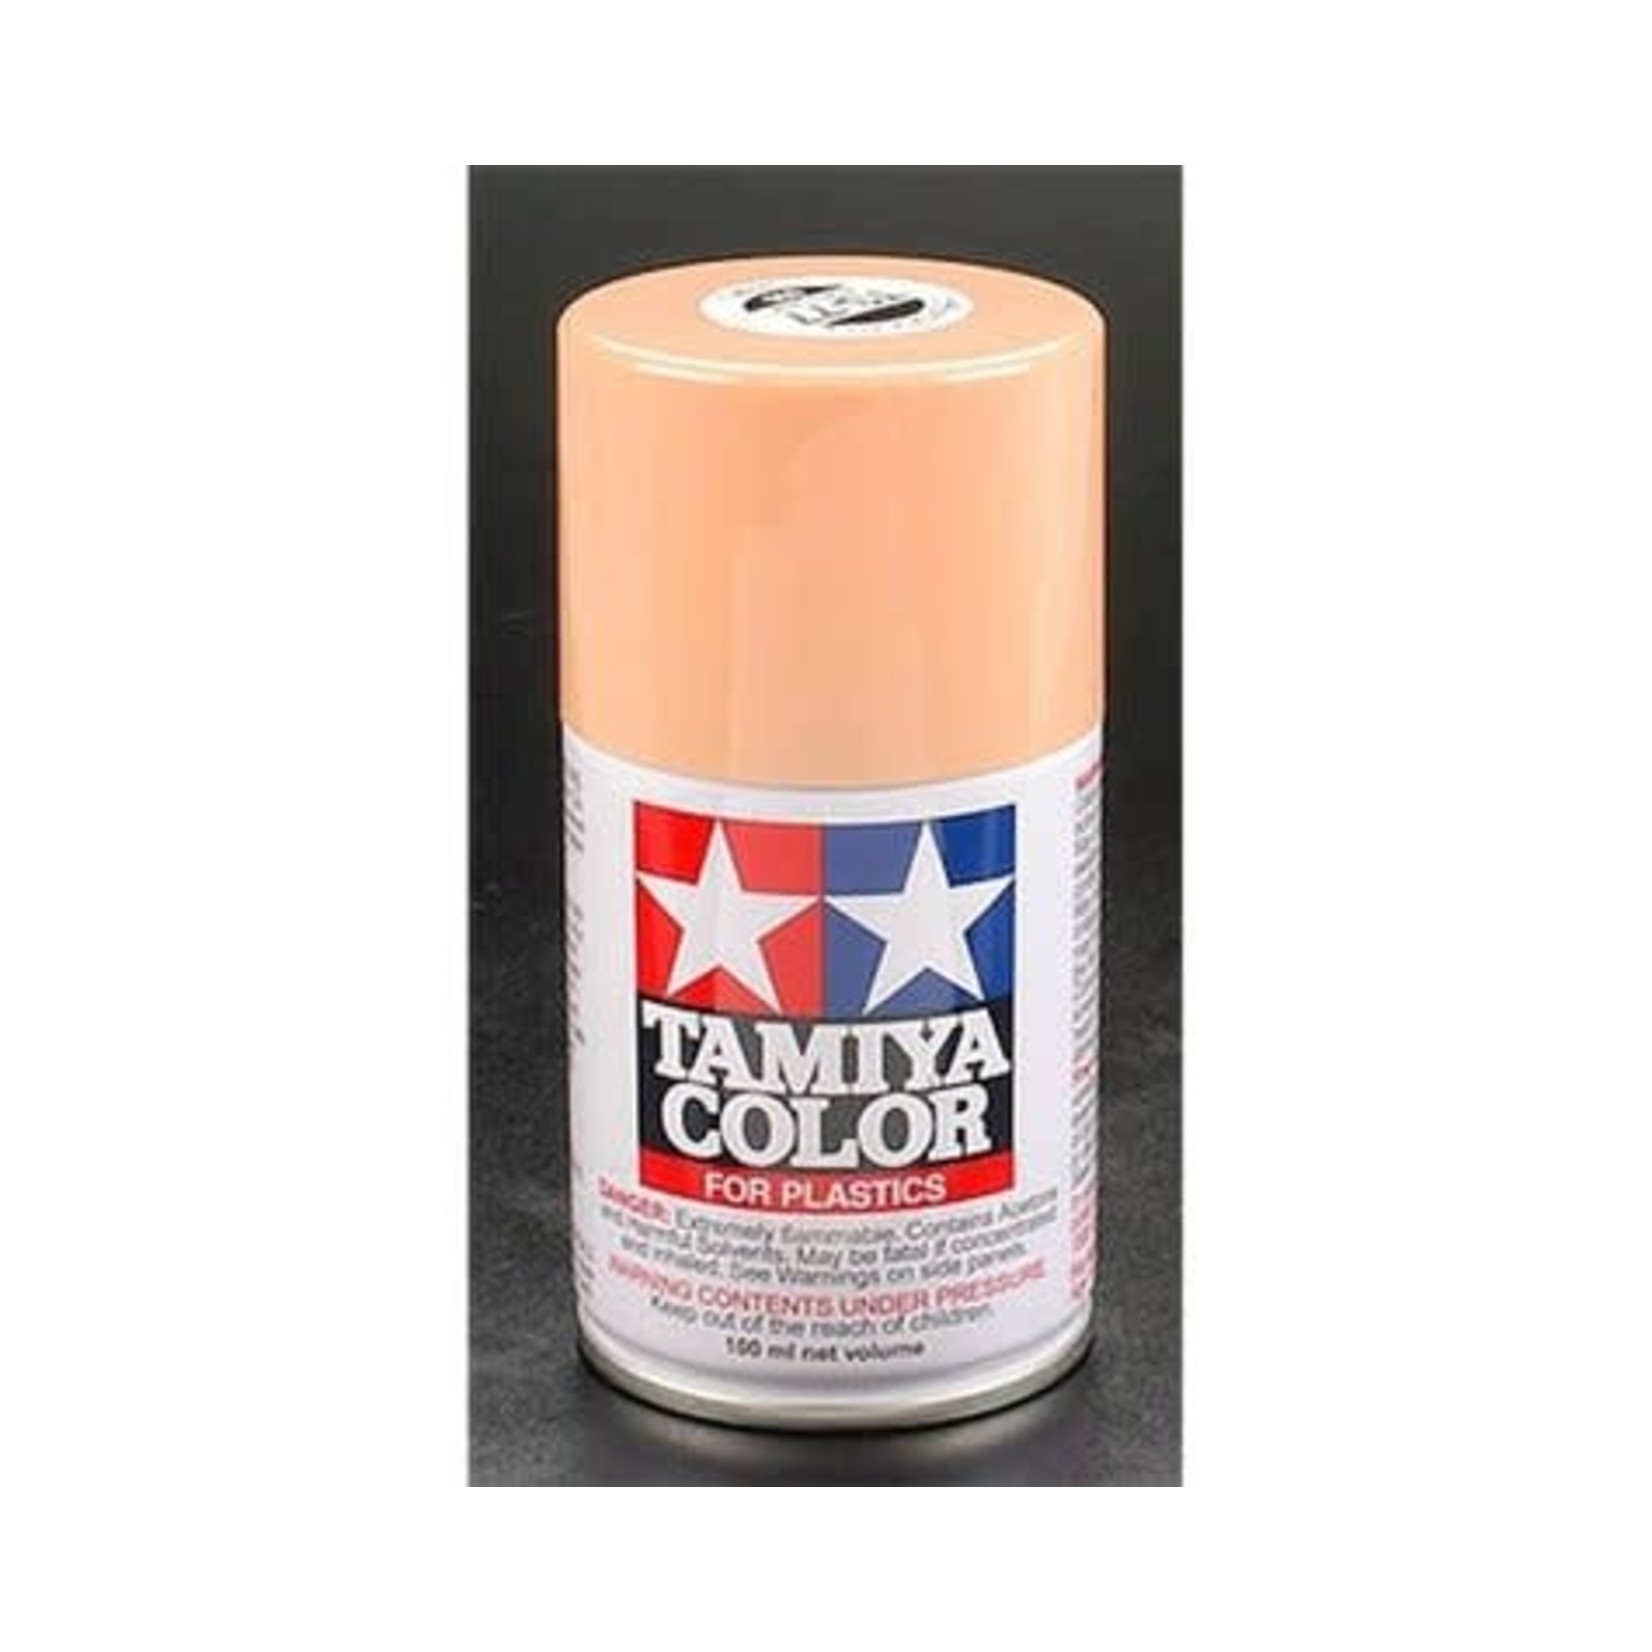 Tamiya Tamiya TS-77 Flat Flesh 2 Lacquer Spray Paint (100ml) #85077